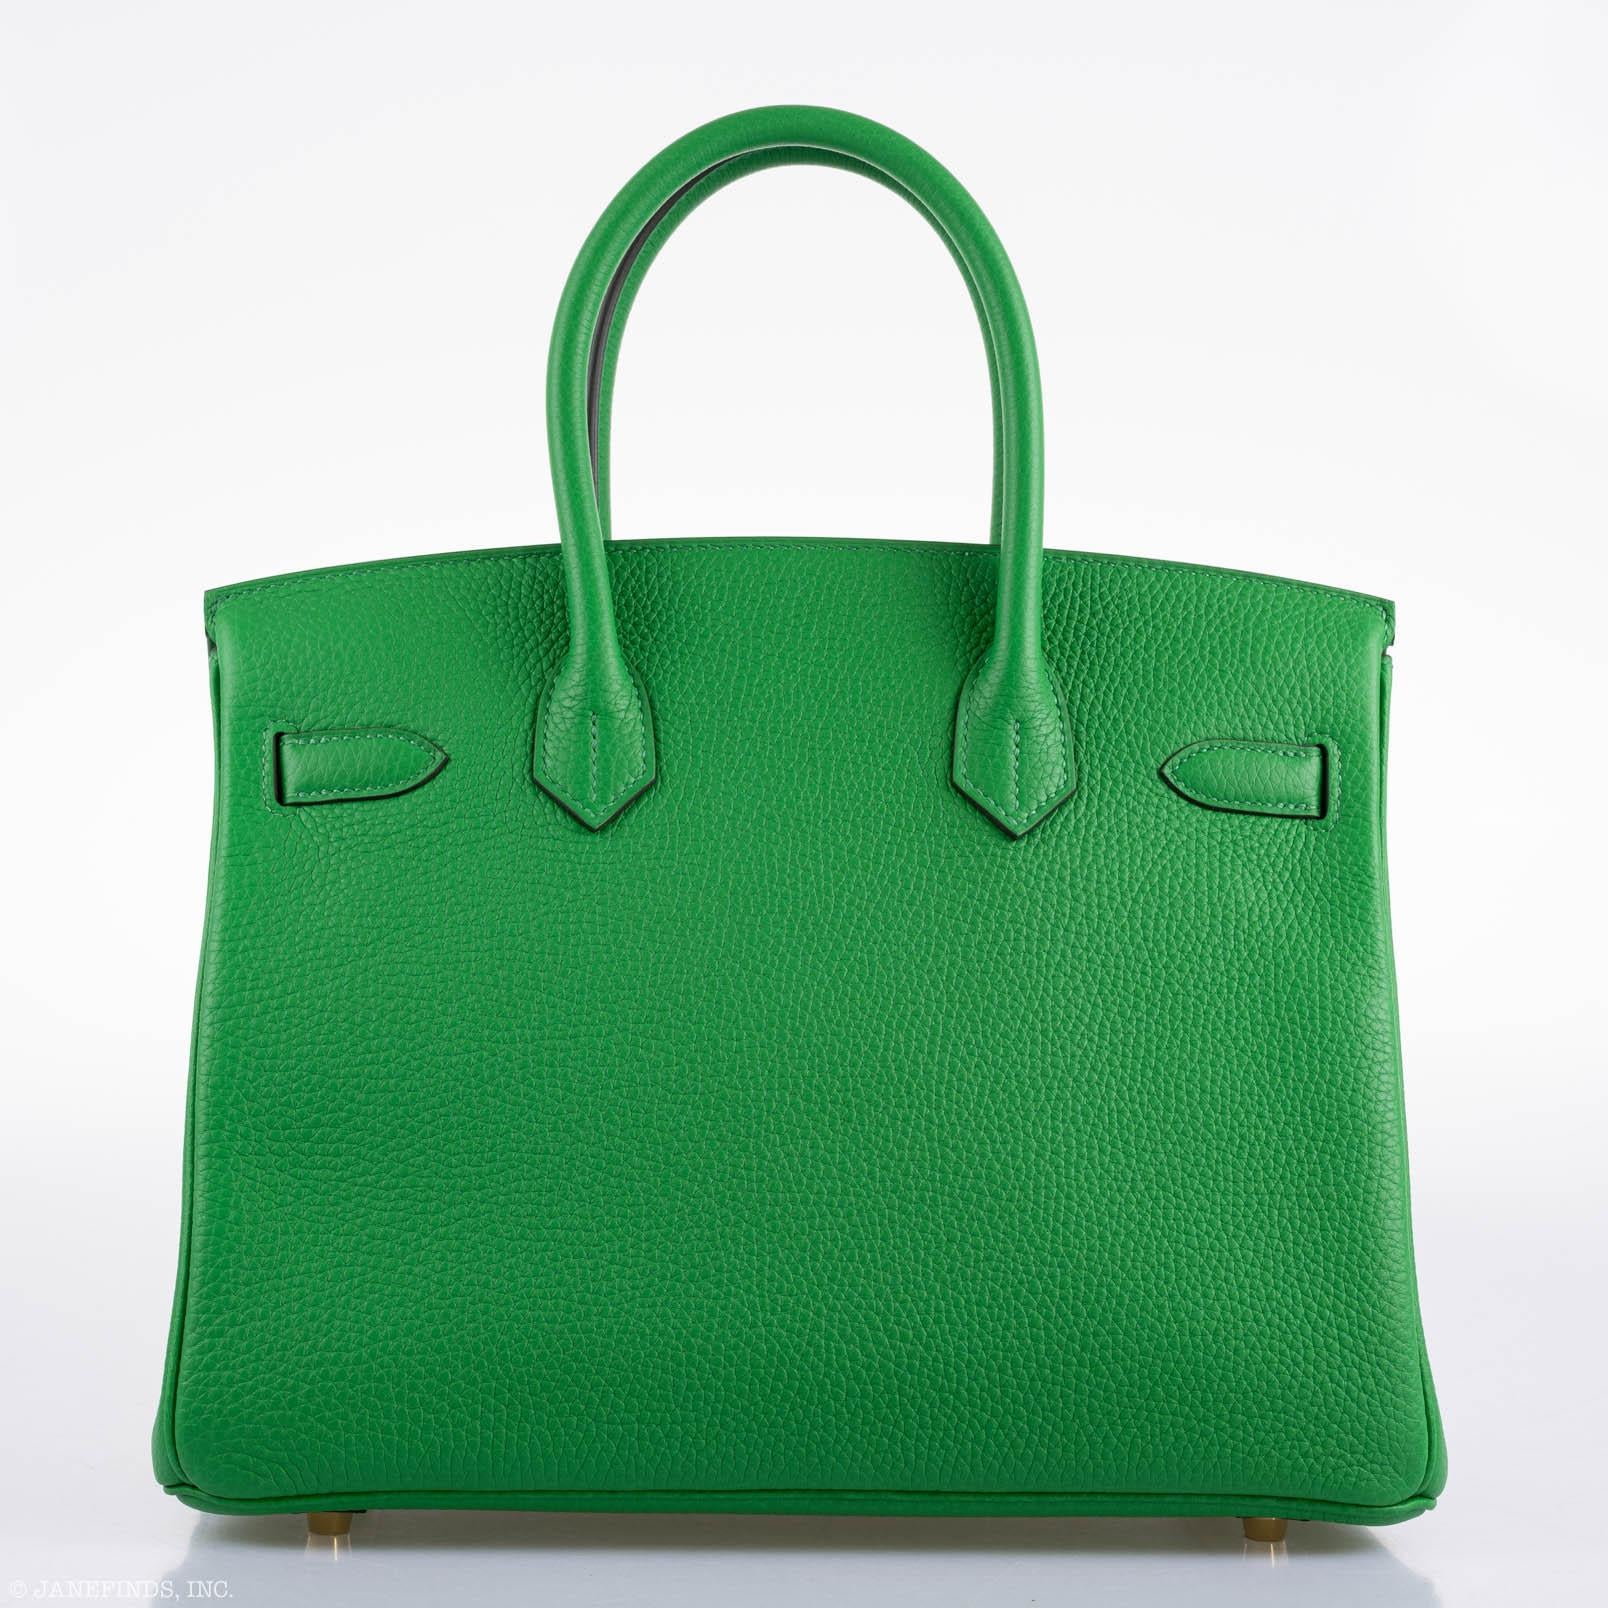 Hermès Birkin 25 Bambou (Bamboo) Green Togo with Gold Hardware - 2020, Y